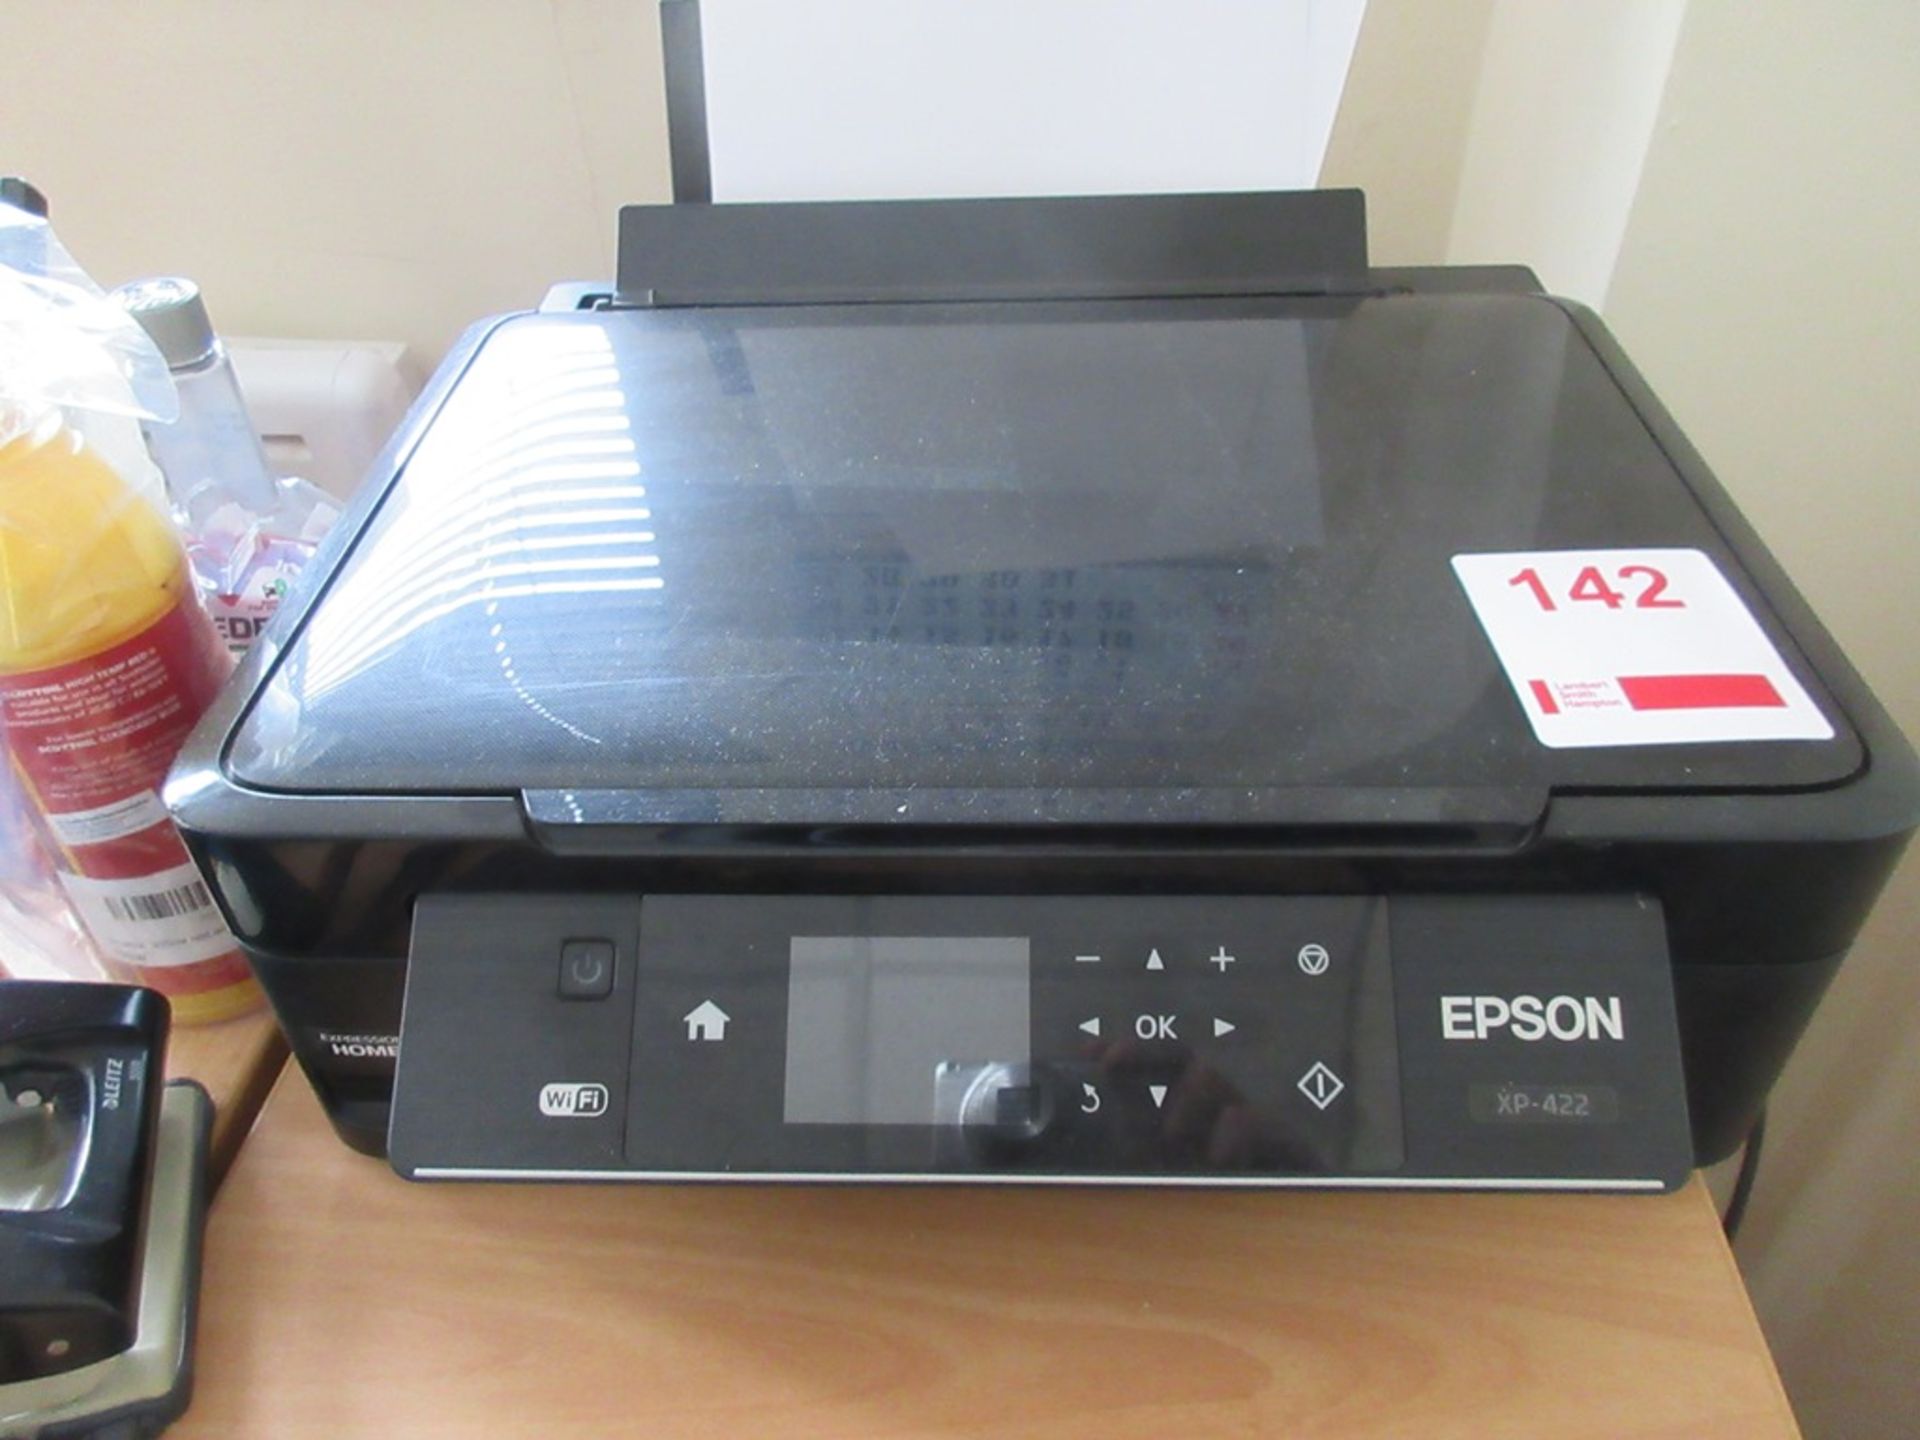 Epson XP-422 office printer